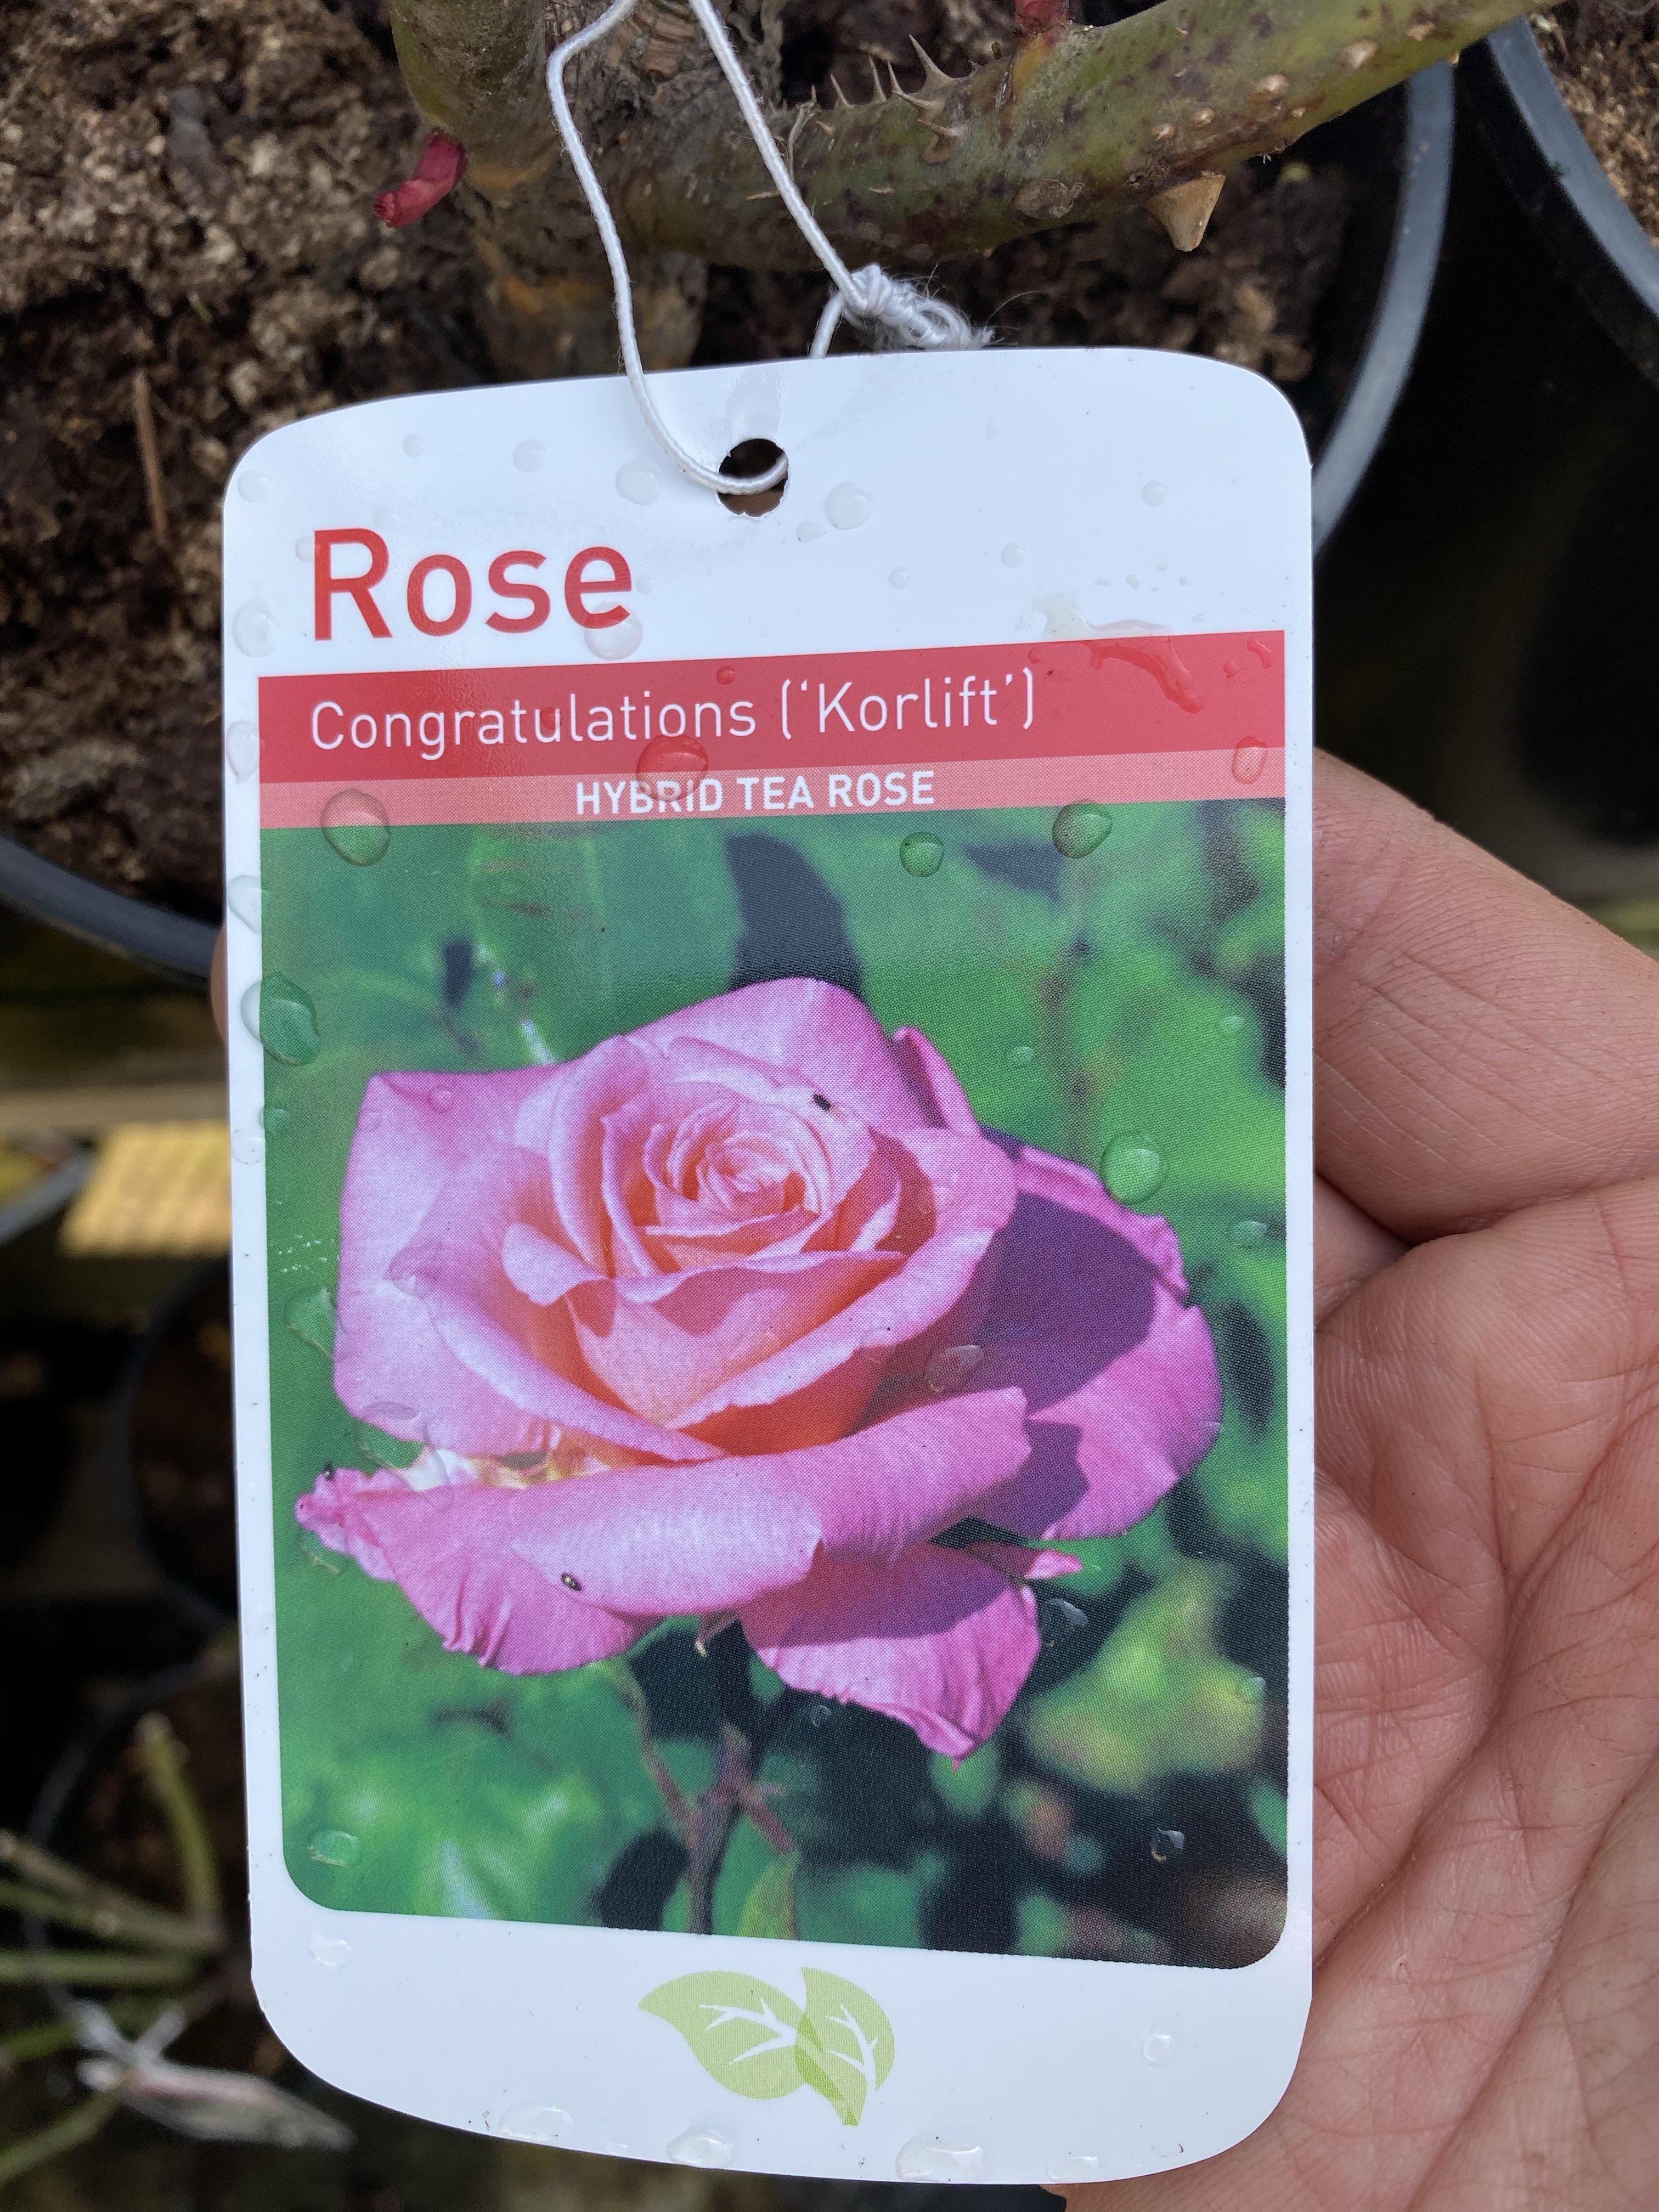 Rose “Congratulations”